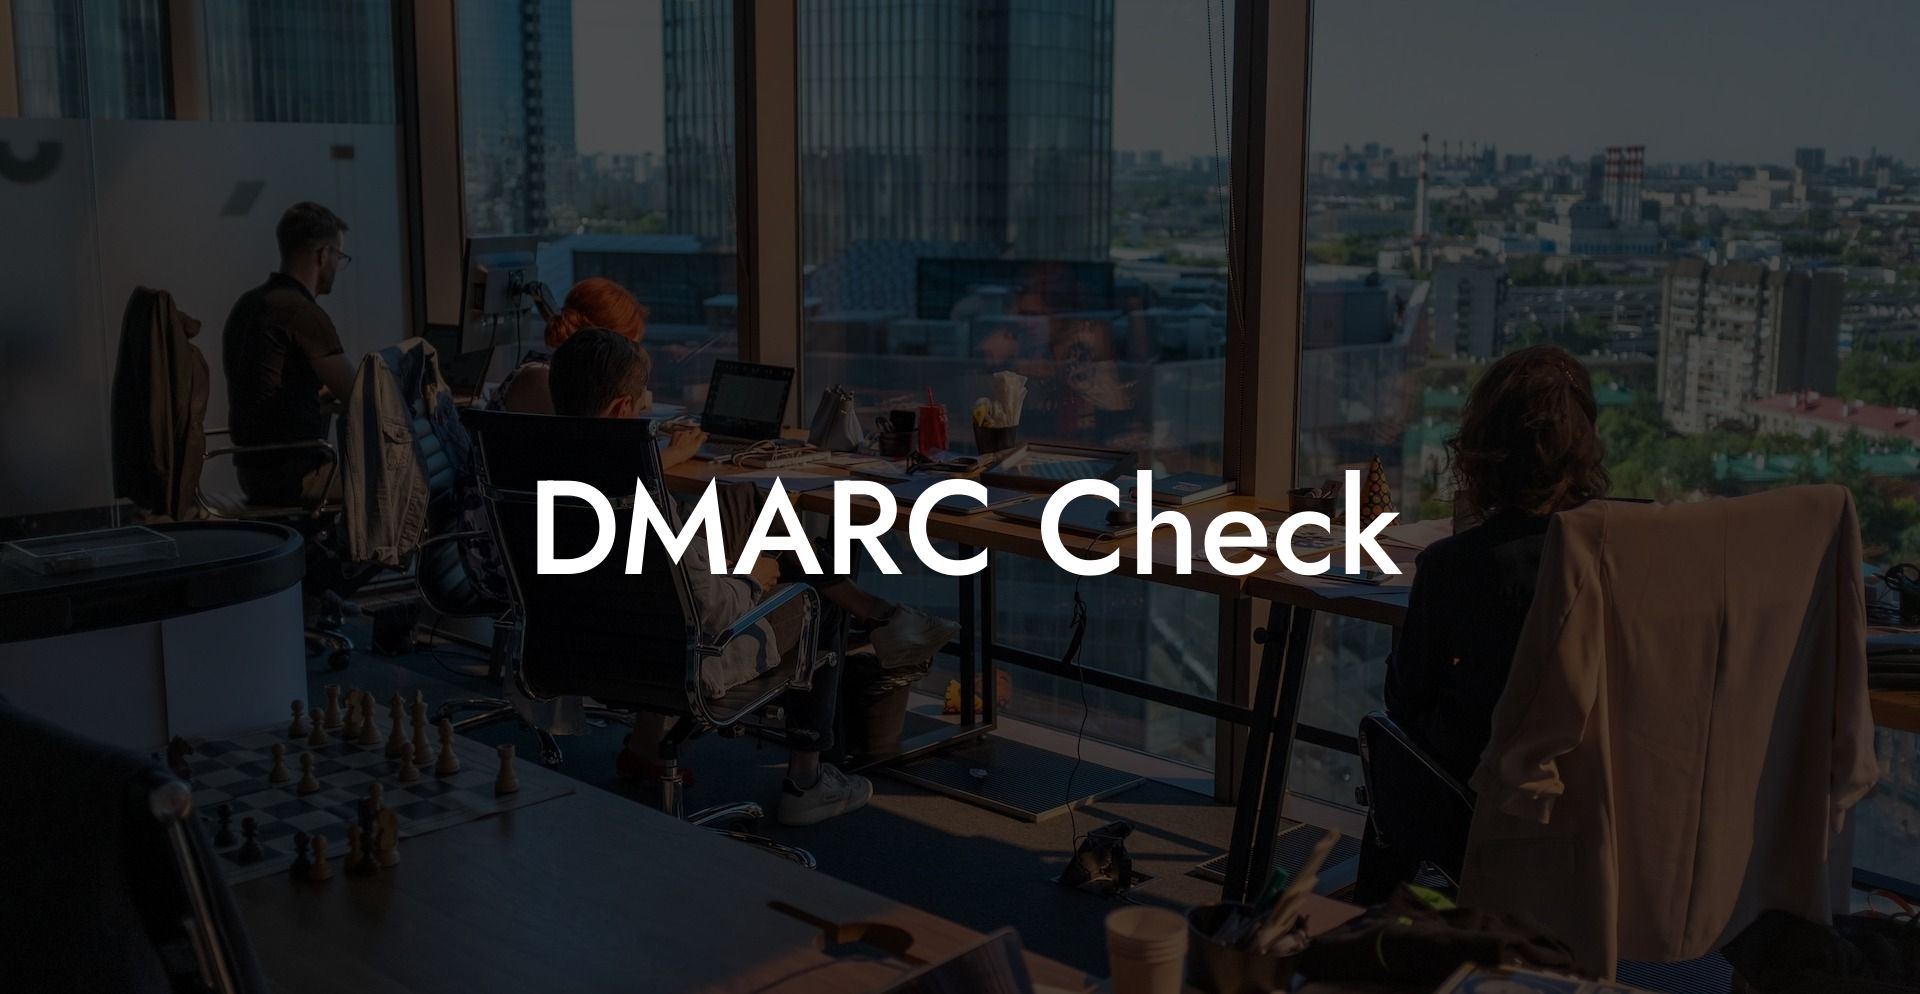 DMARC Check